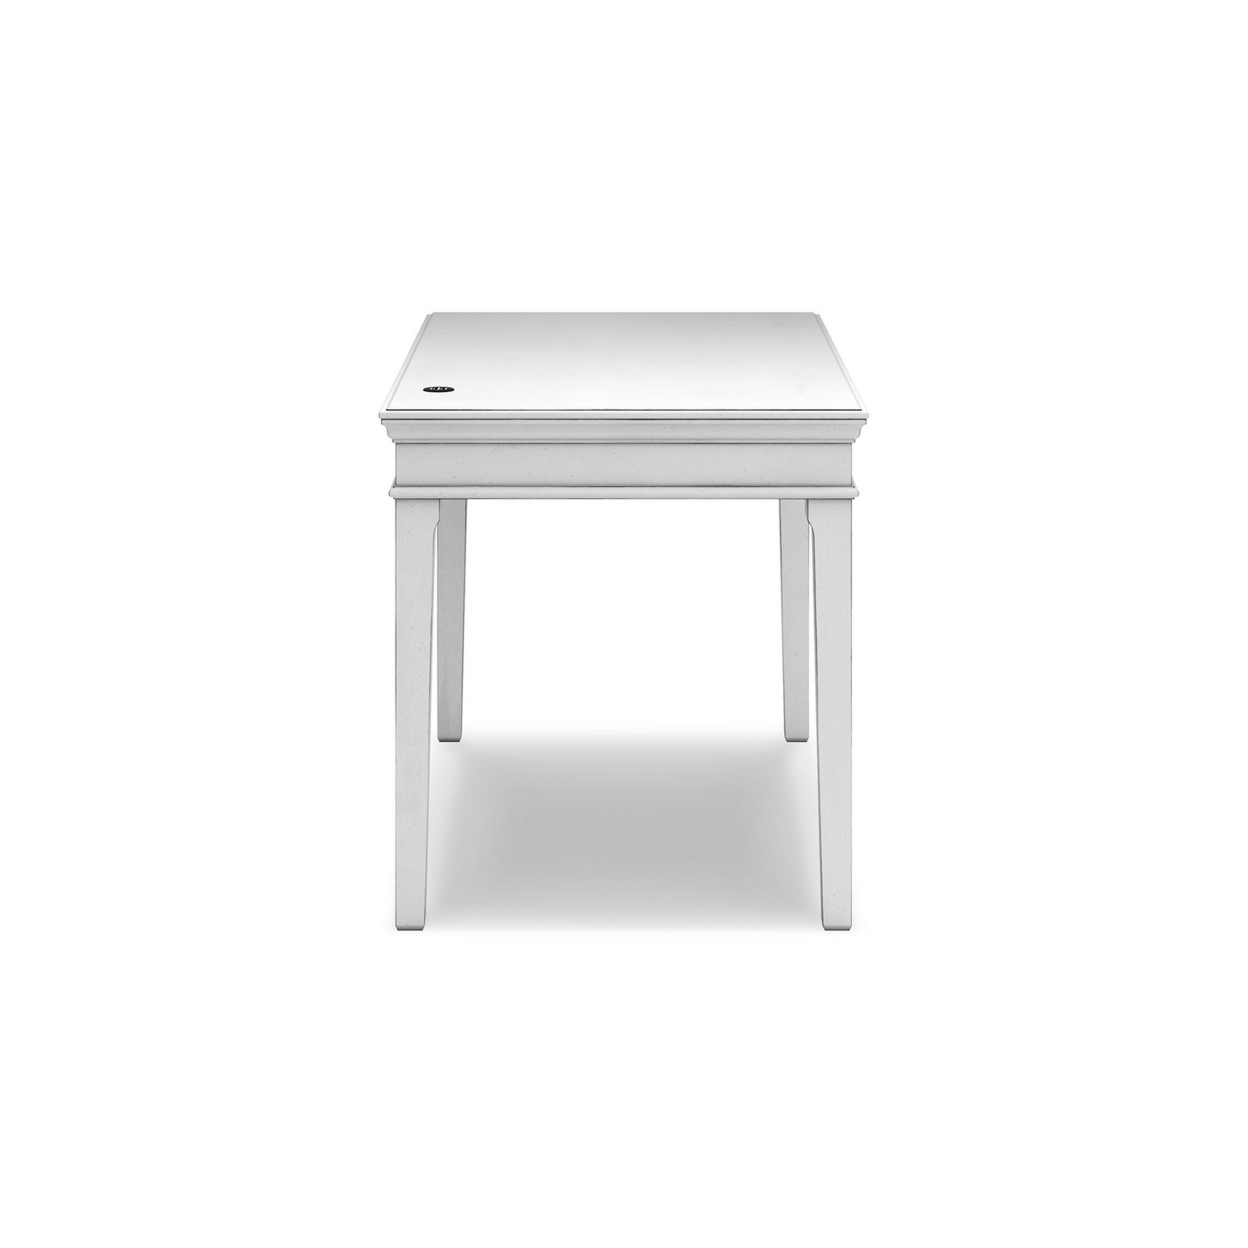 48 Inch Home Office Desk, Weathered White Wood, Single Drawer, 2 USB Ports- Saltoro Sherpi